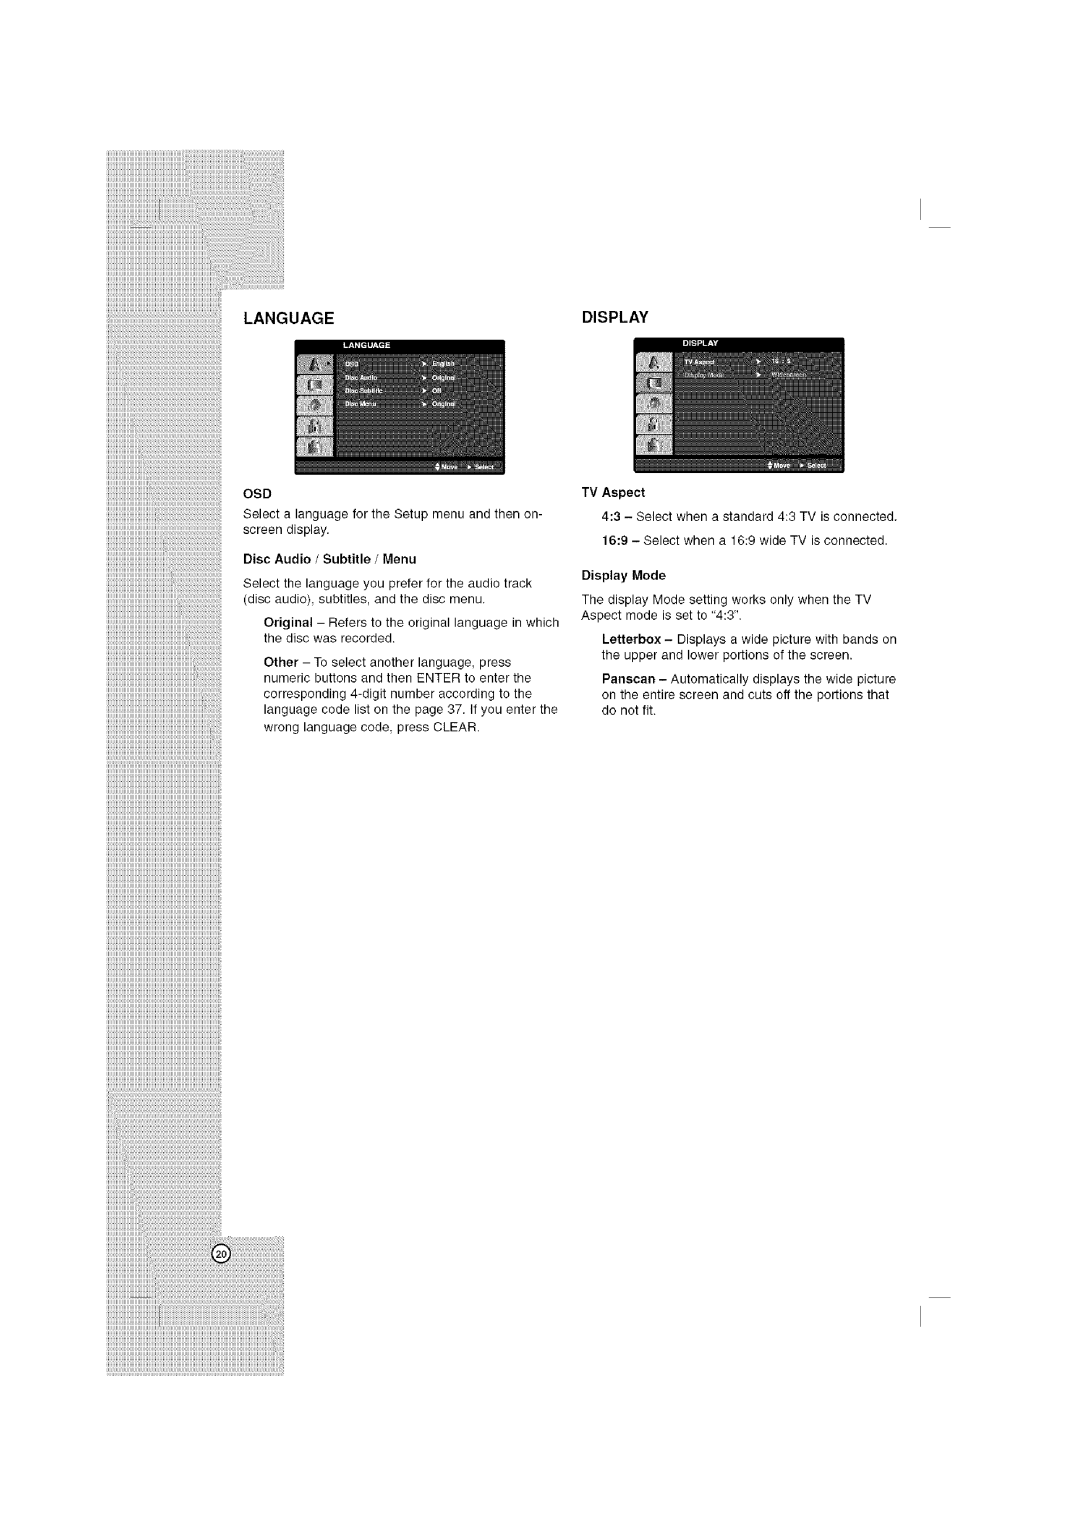 LG Electronics LHT764 owner manual Disc Audio / Subtitle / Menu, TV Aspect, Display Mode 